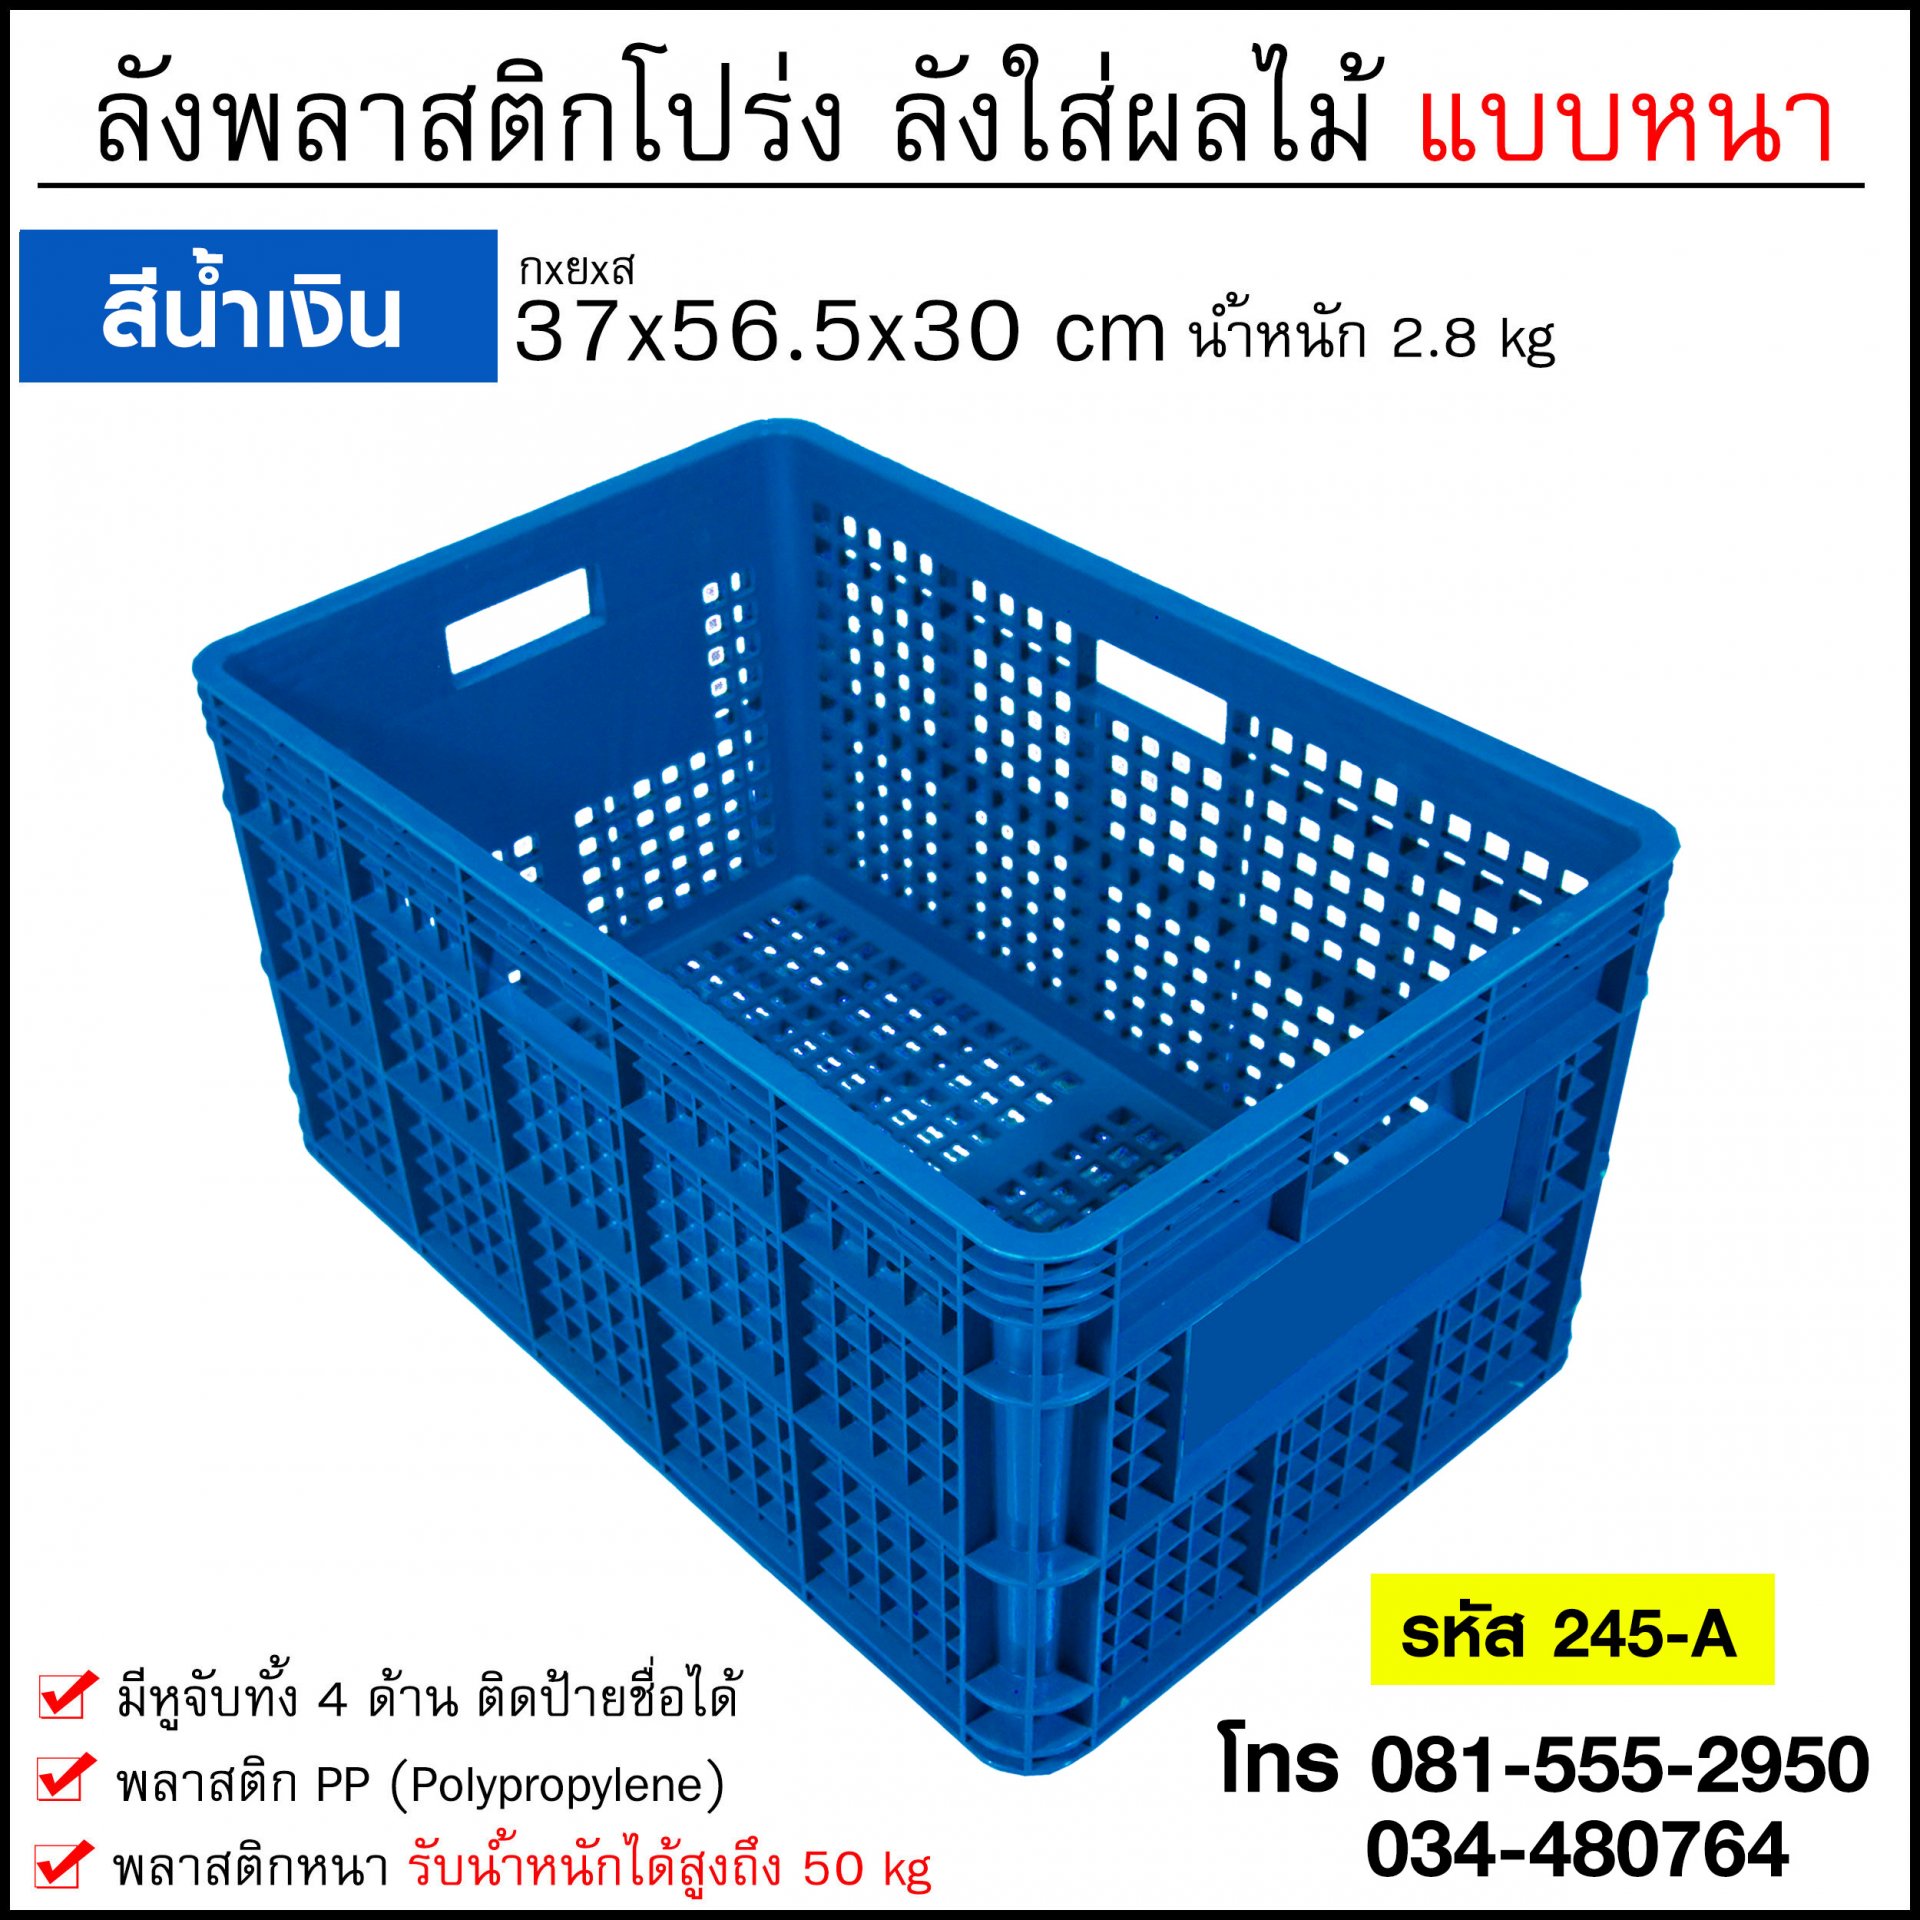 Plastic basket ตะกร้าผลไม้